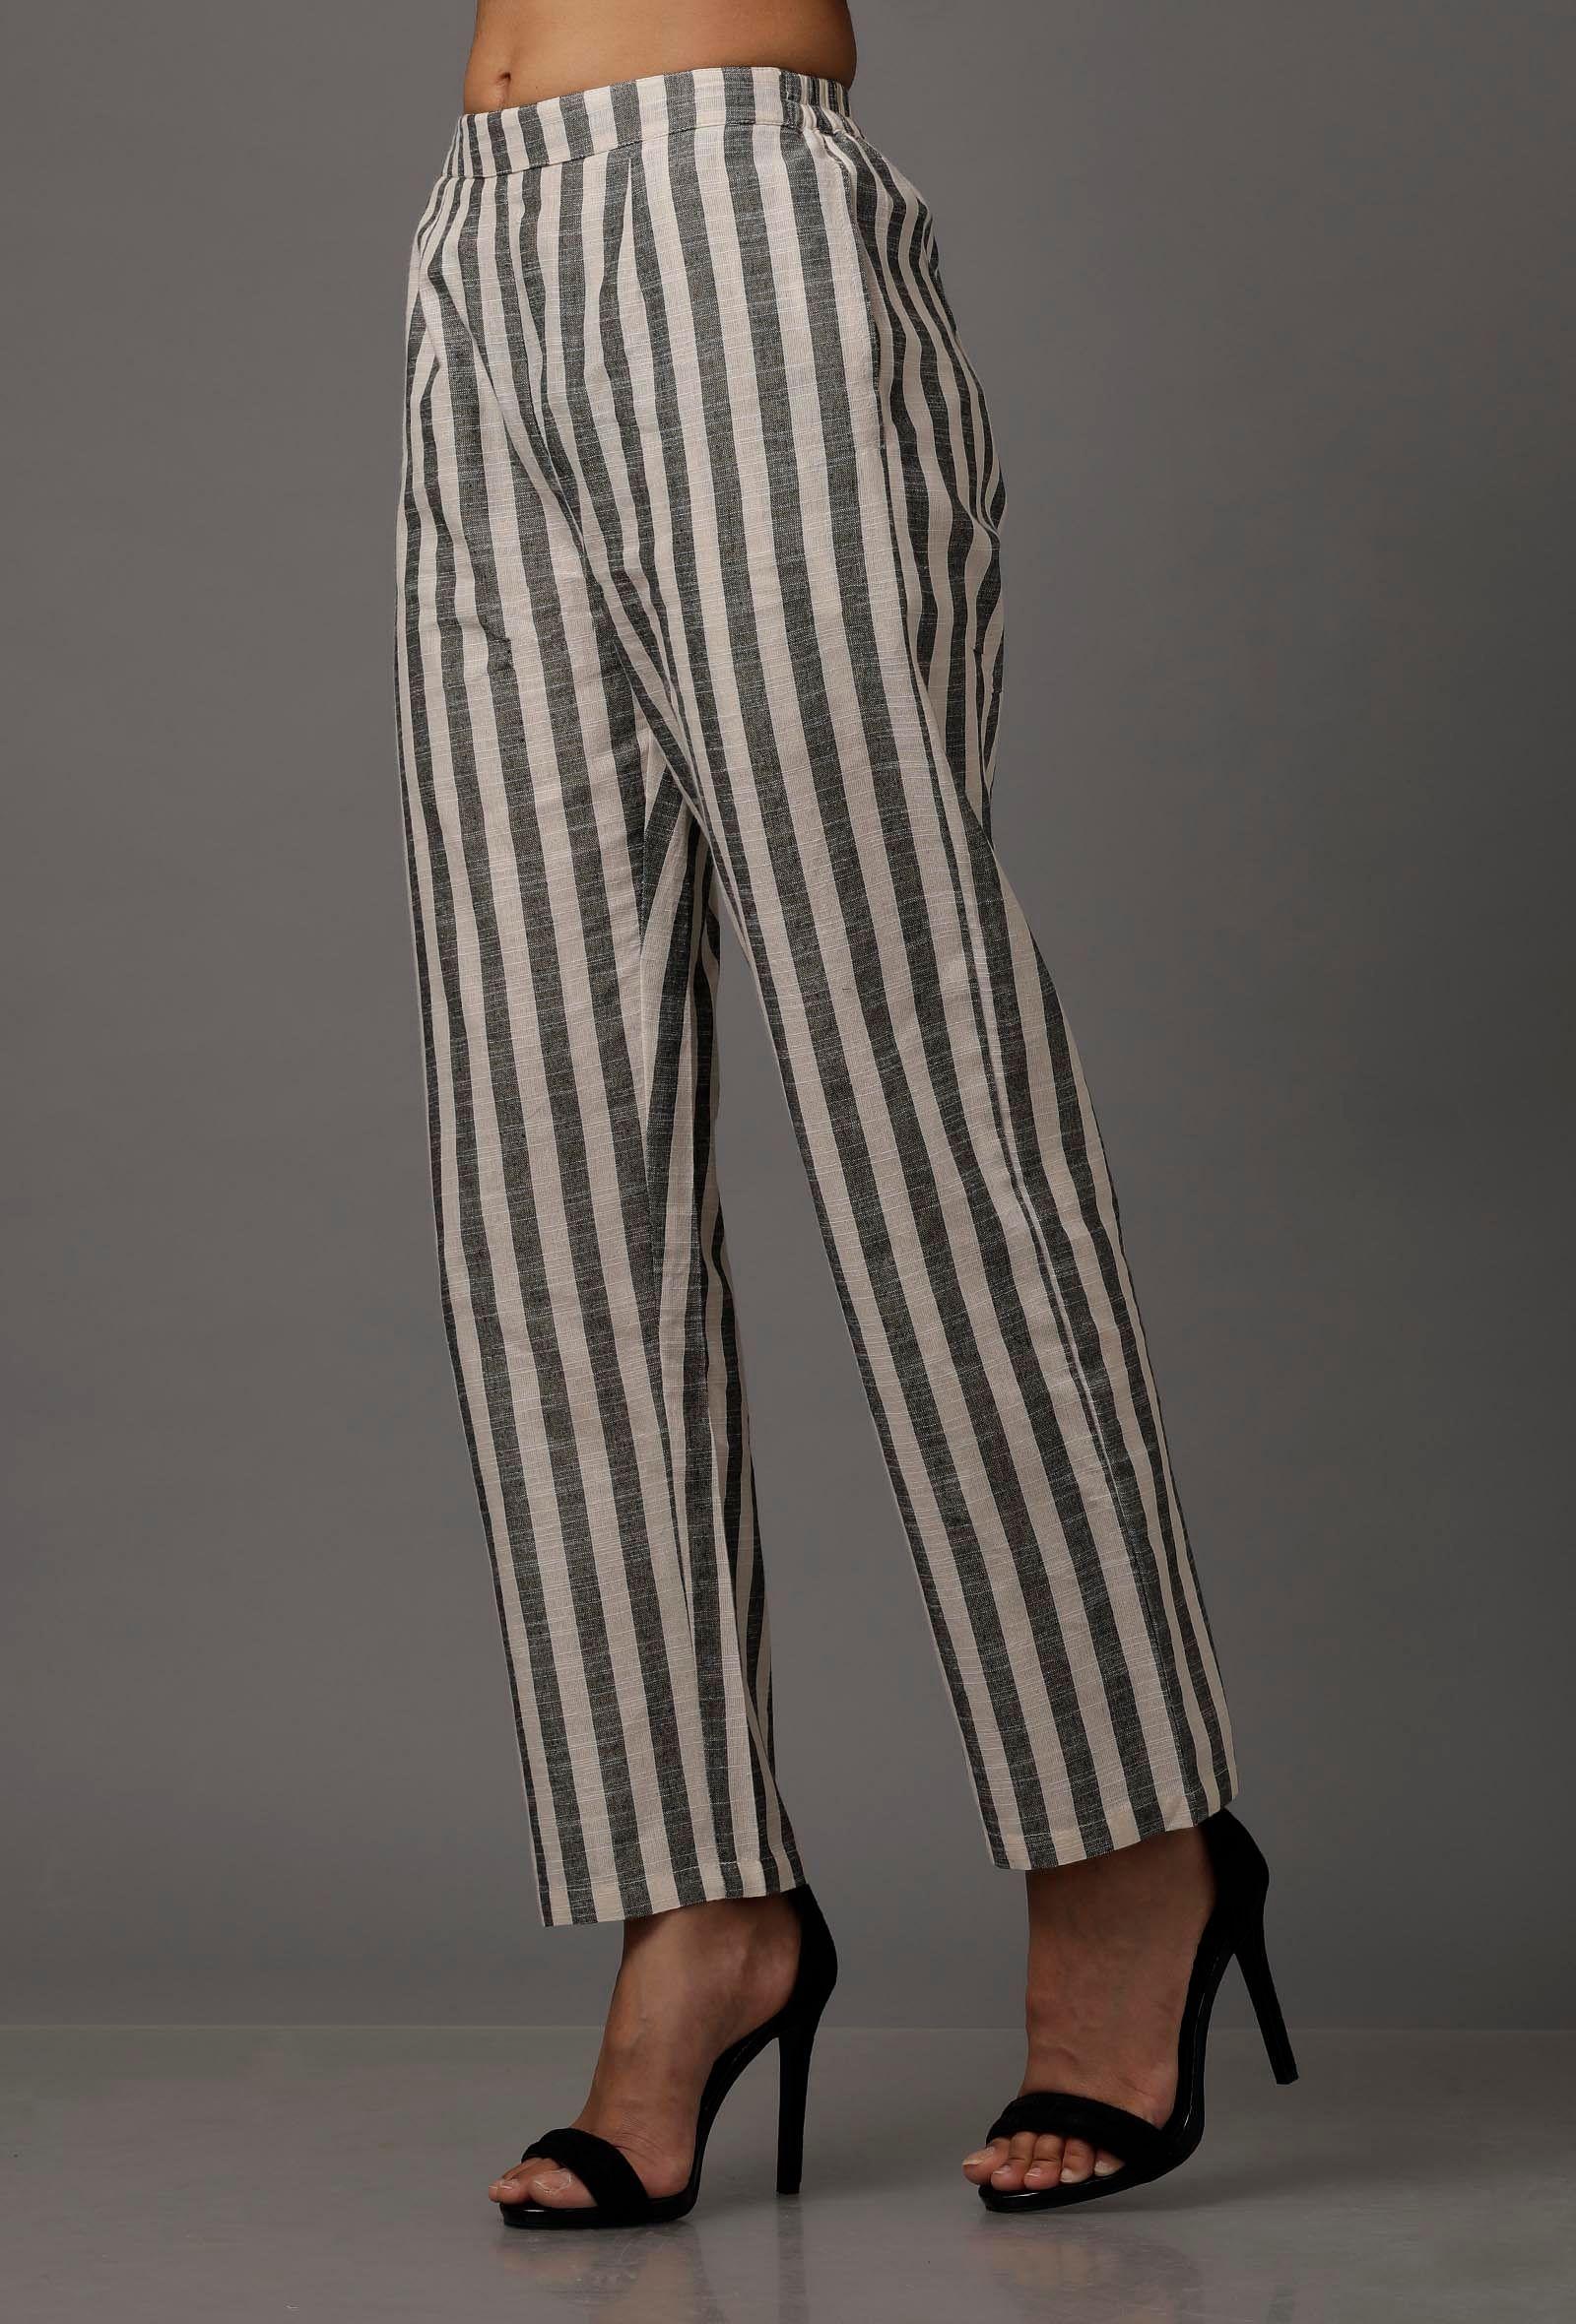 black-and-white-stripes-pure-woven-cotton-pants